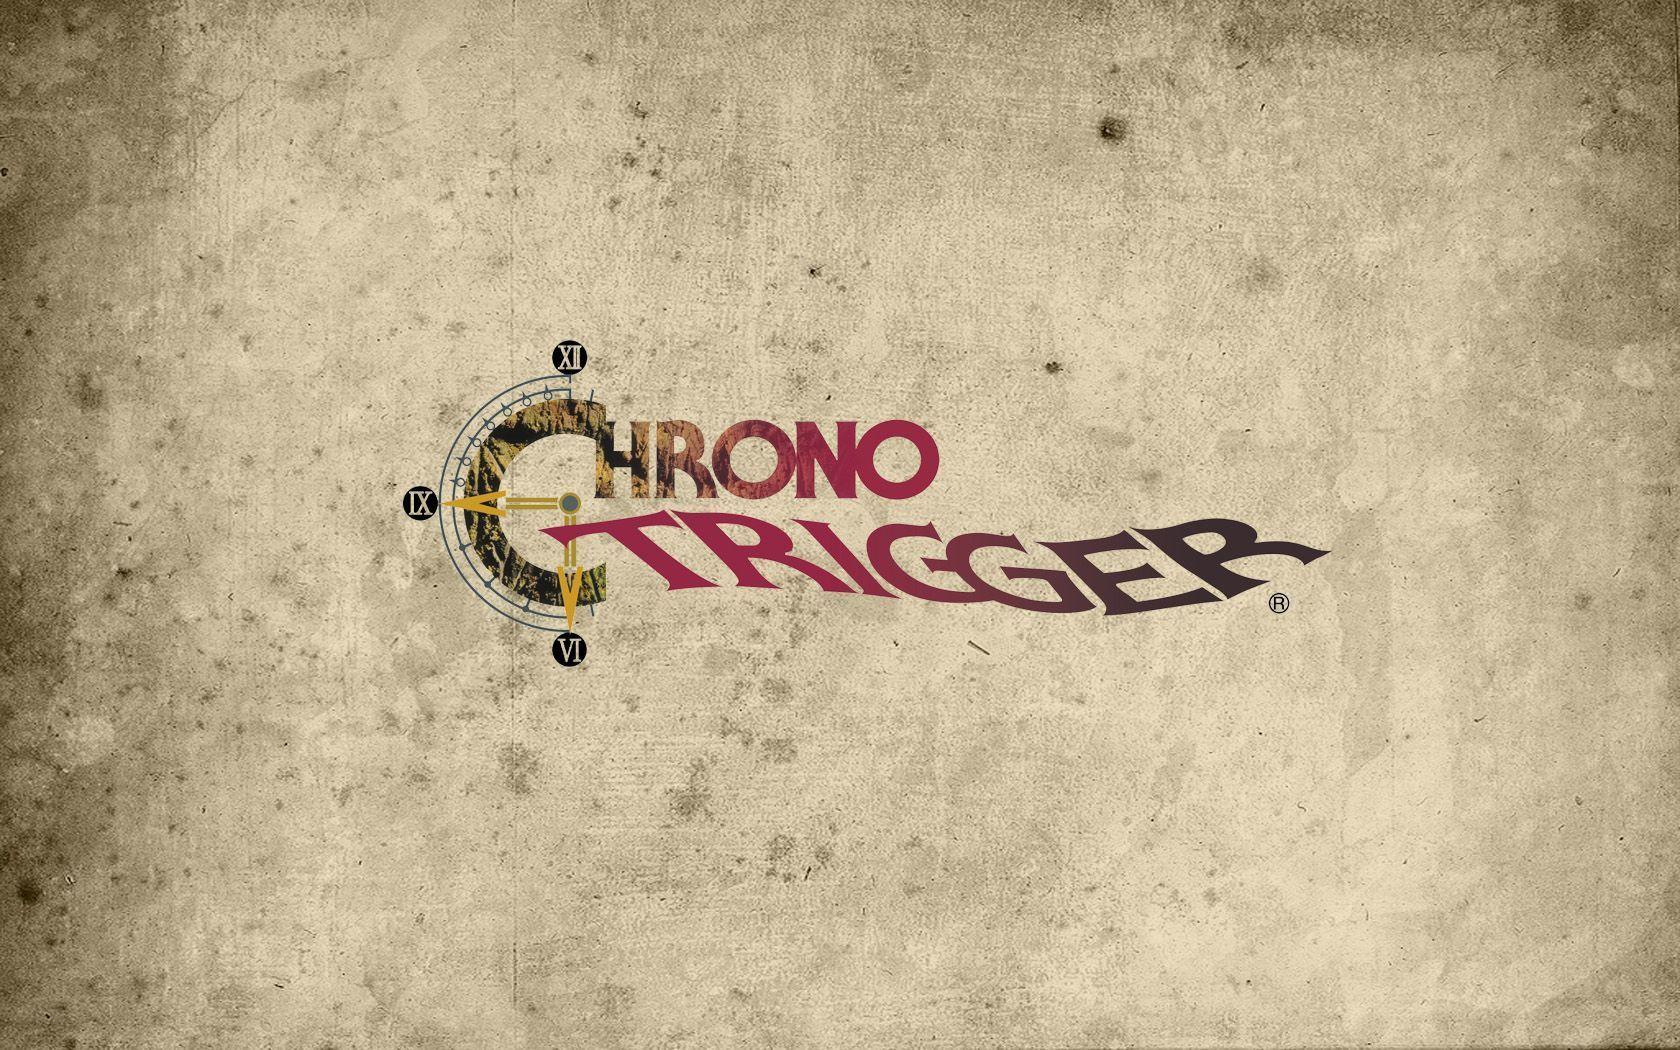 Chrono Trigger Wallpaper, My Chrono Trigger Wallpaper Gaming